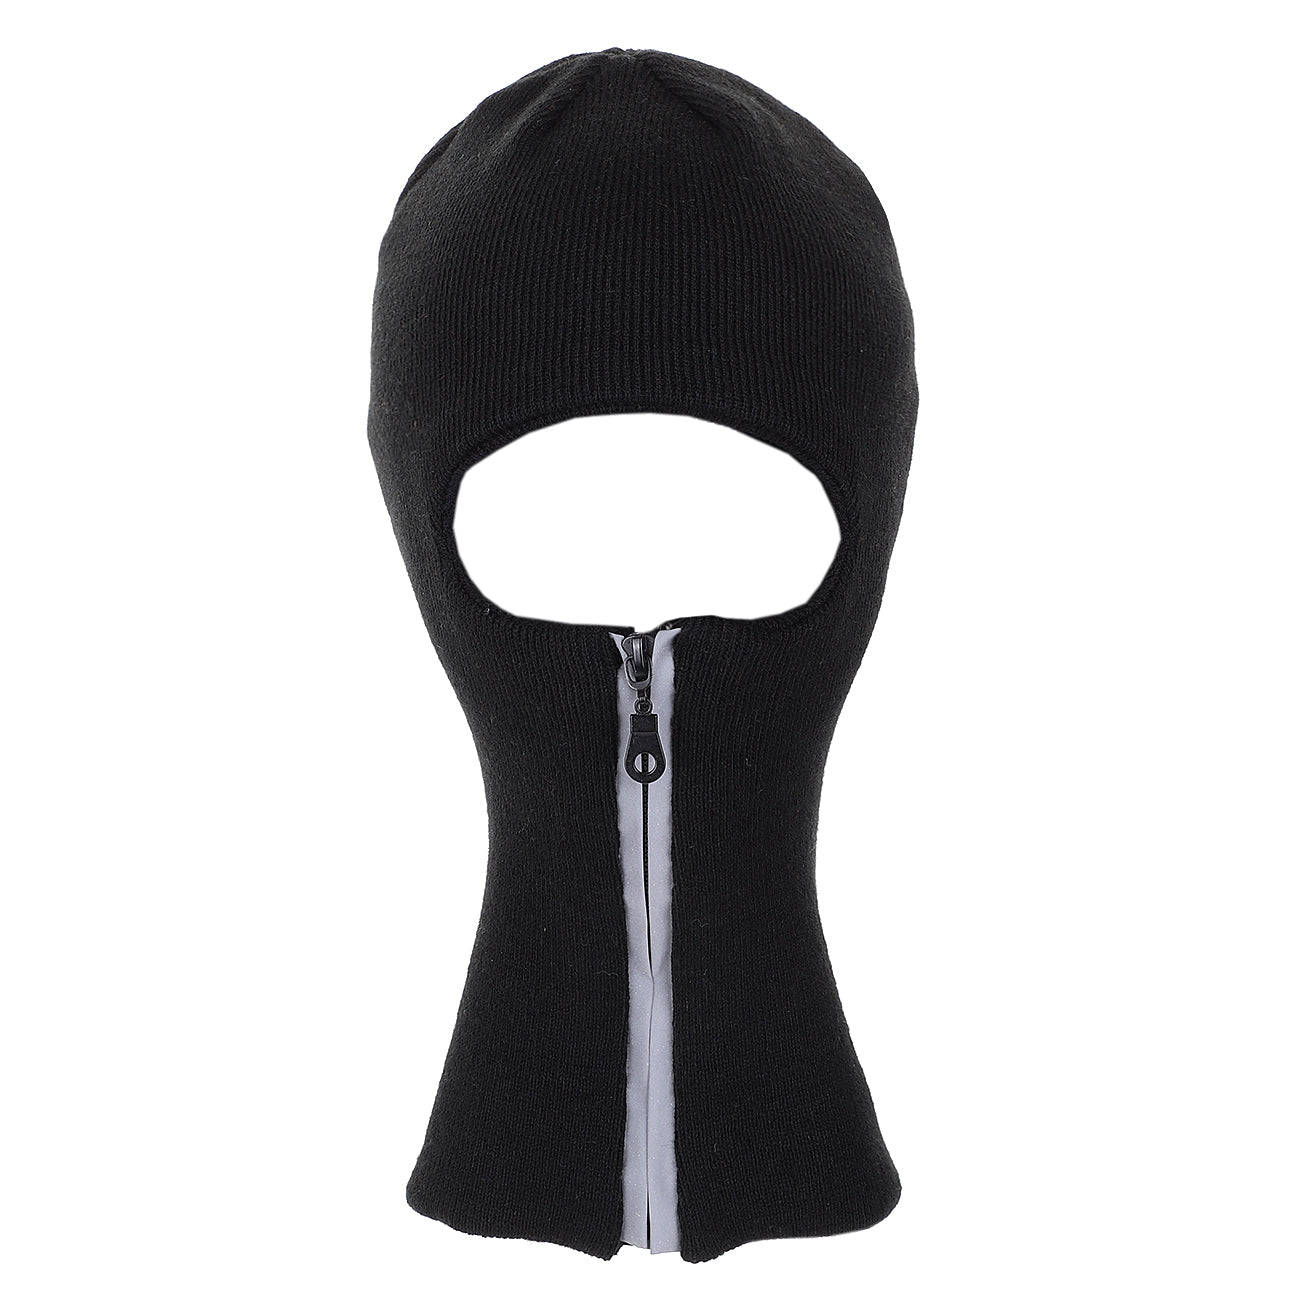 Black Ski Mask With Zipper Wallpaper